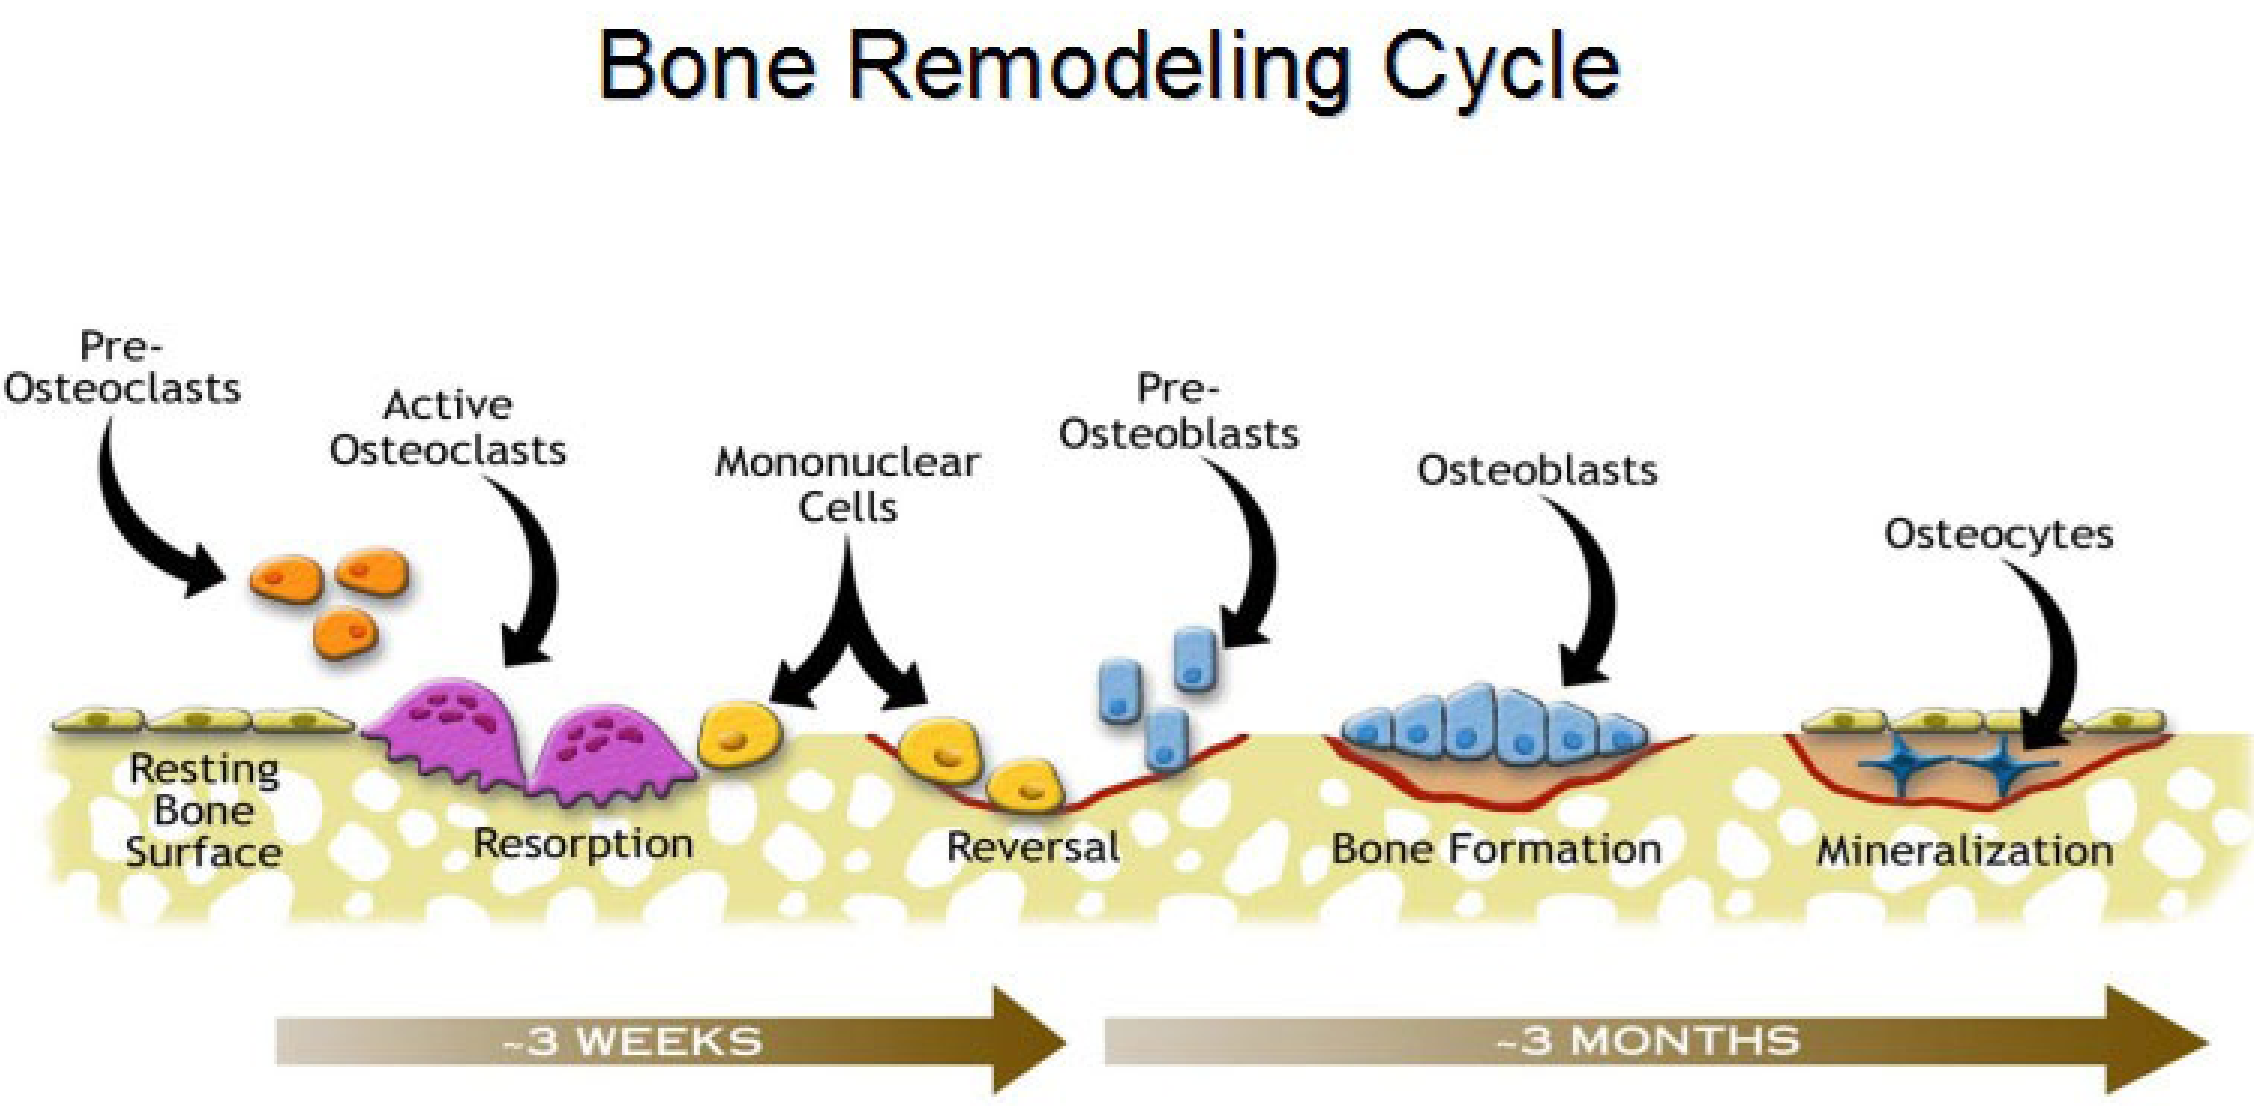 Bone Remodeling Osteoclasts followed by